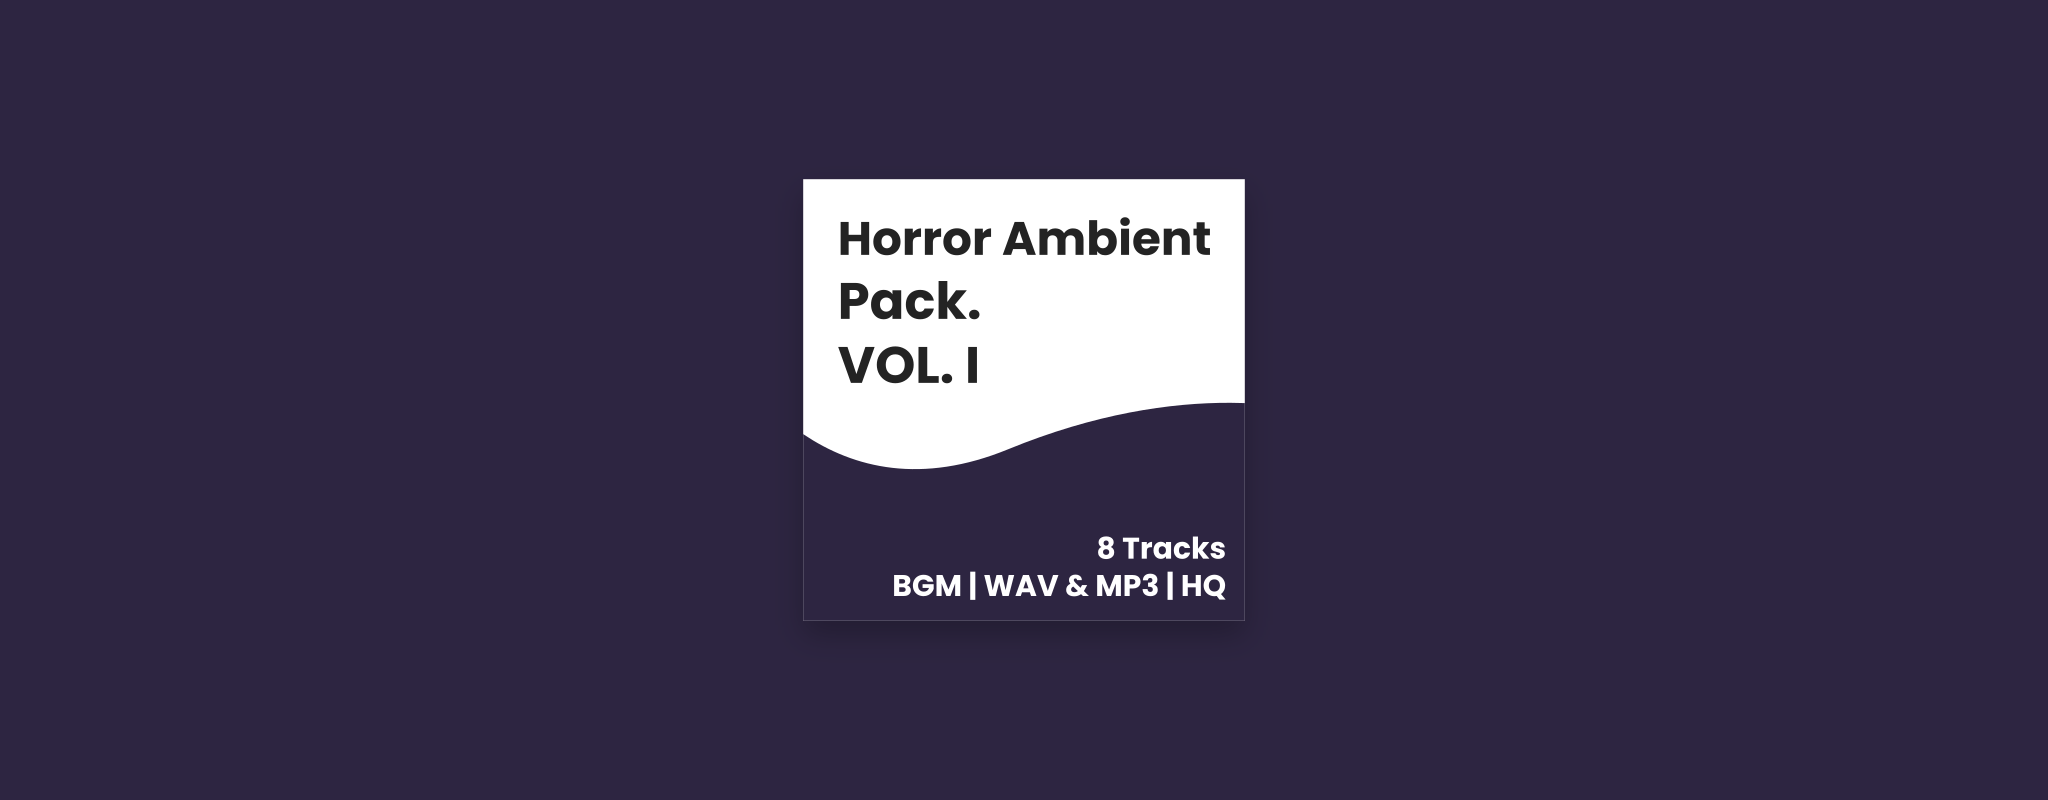 Horror Ambient BGM Pack, Vol. 1